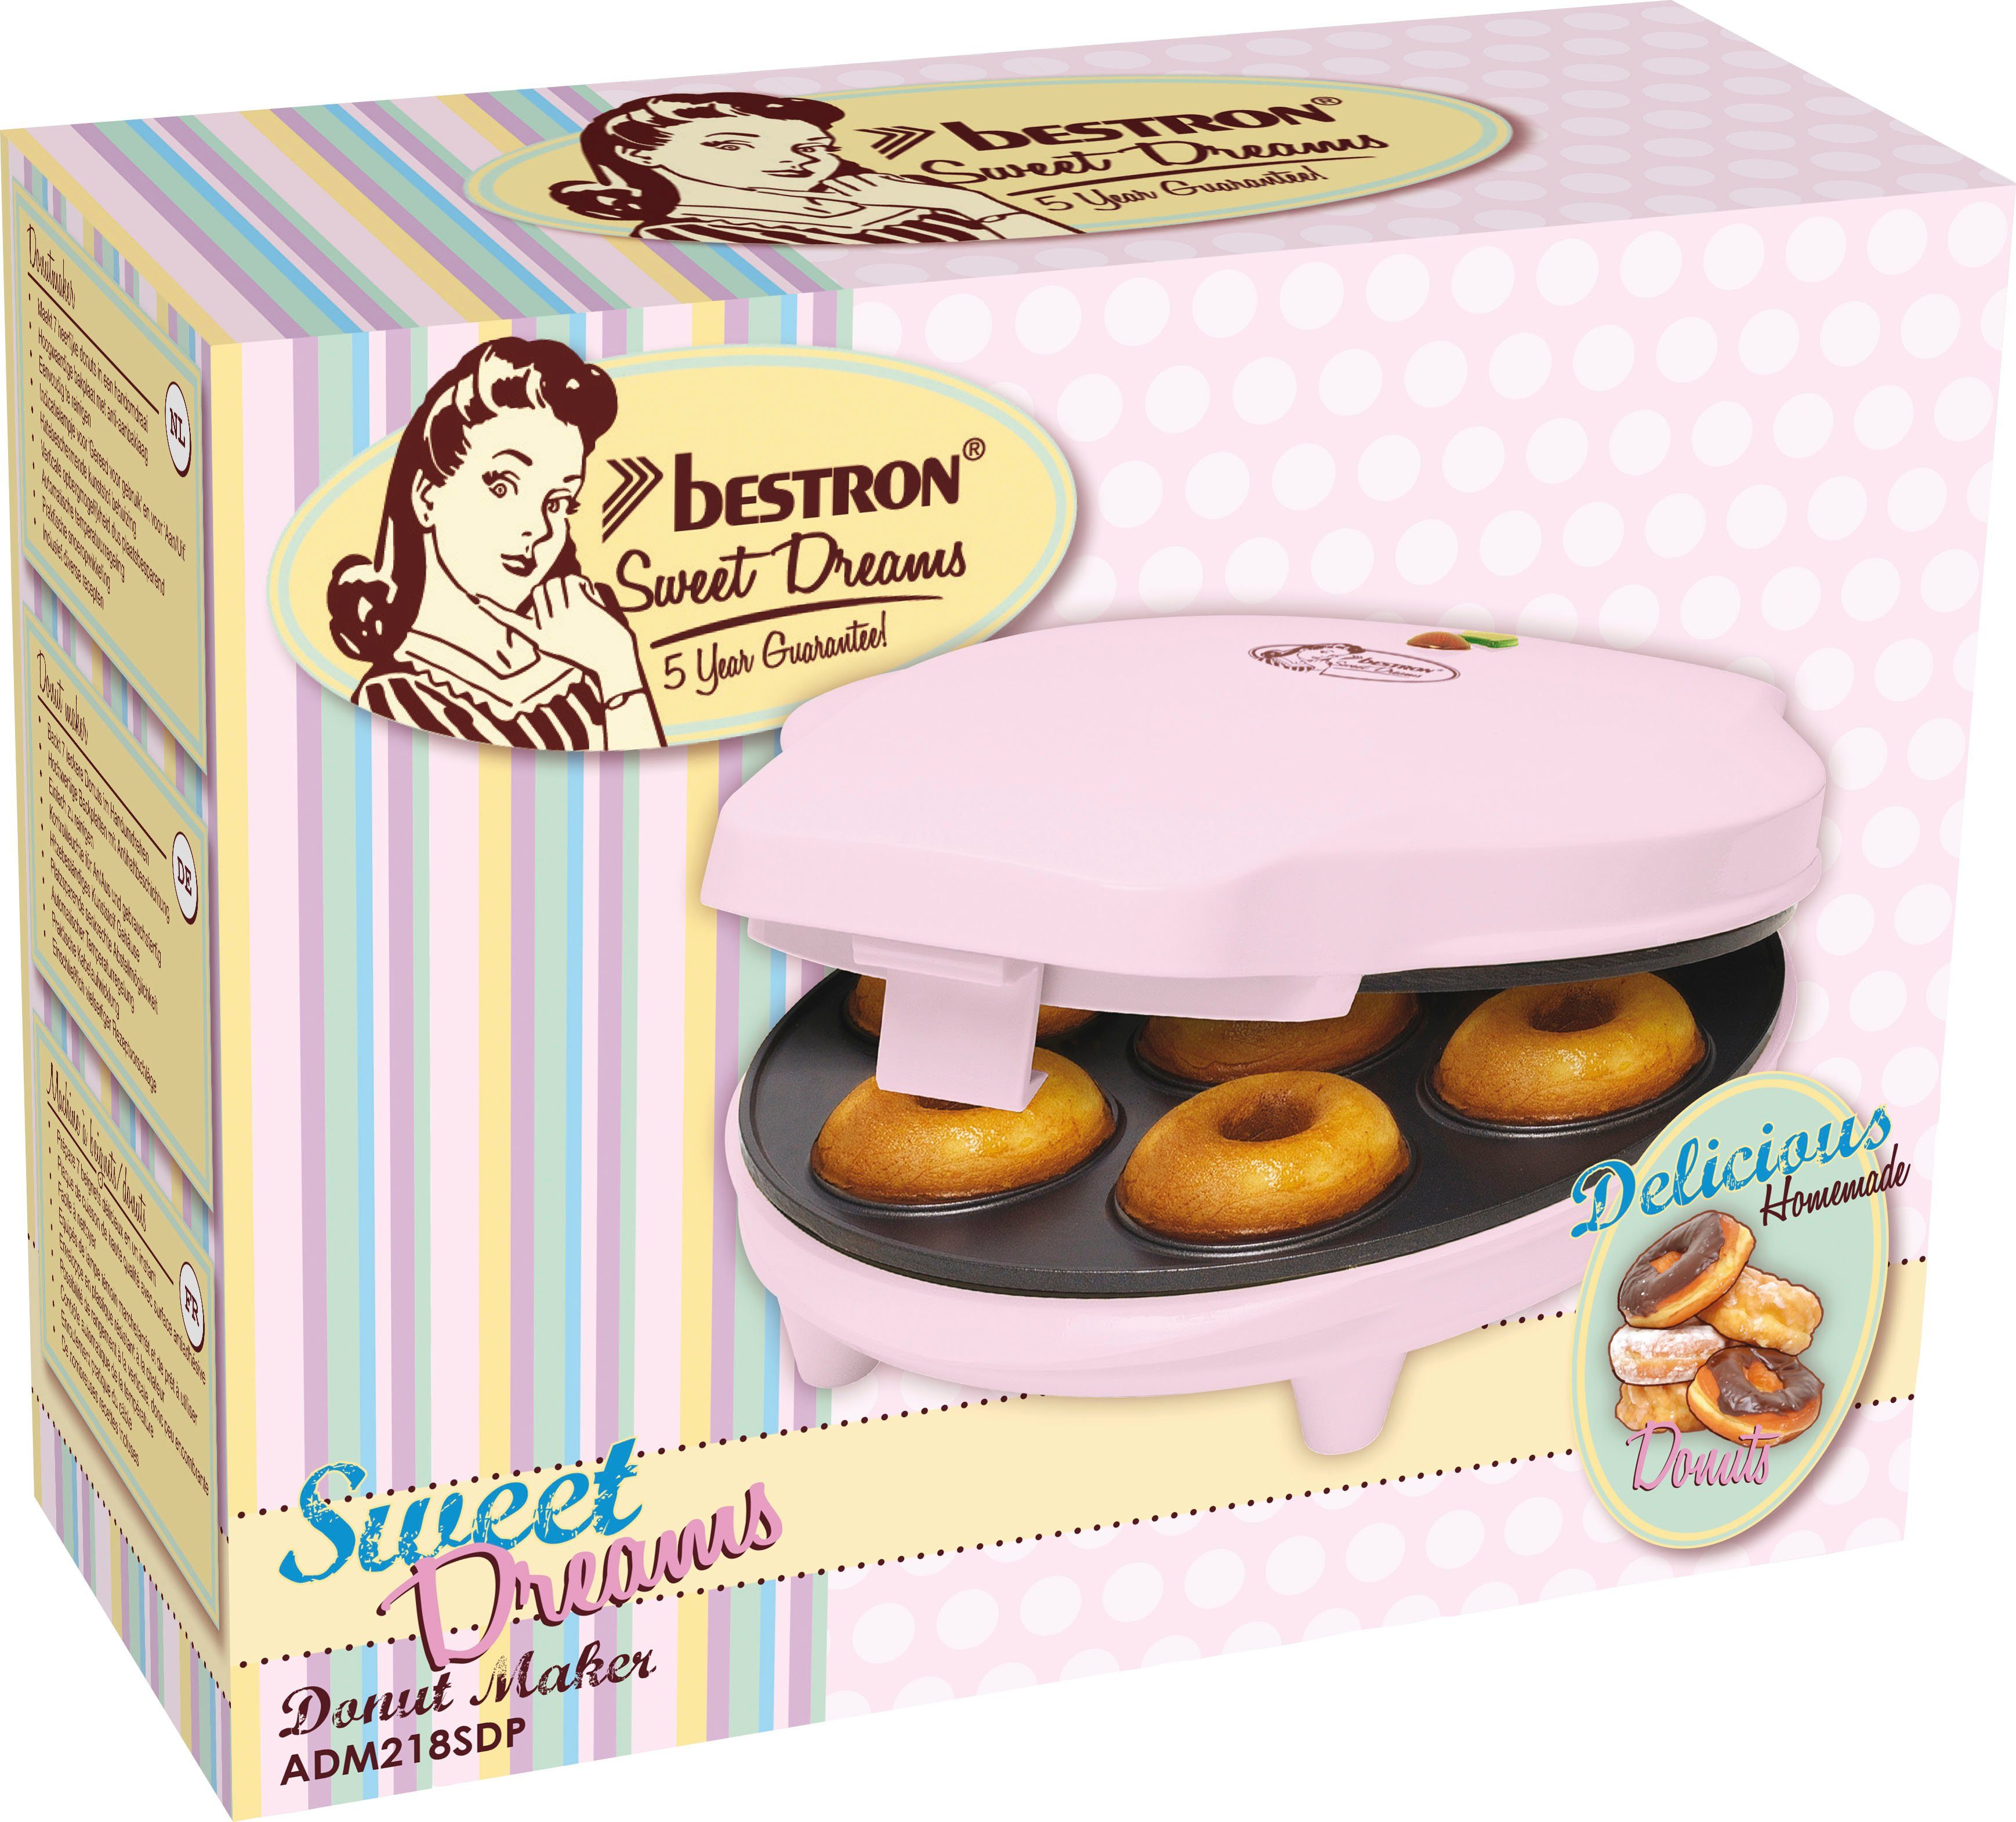 bestron Waffeleisen Sweet 700 Design, Antihaftbeschichtung, Rosa ADM218SDP, Retro Donut-Maker Dreams, im W